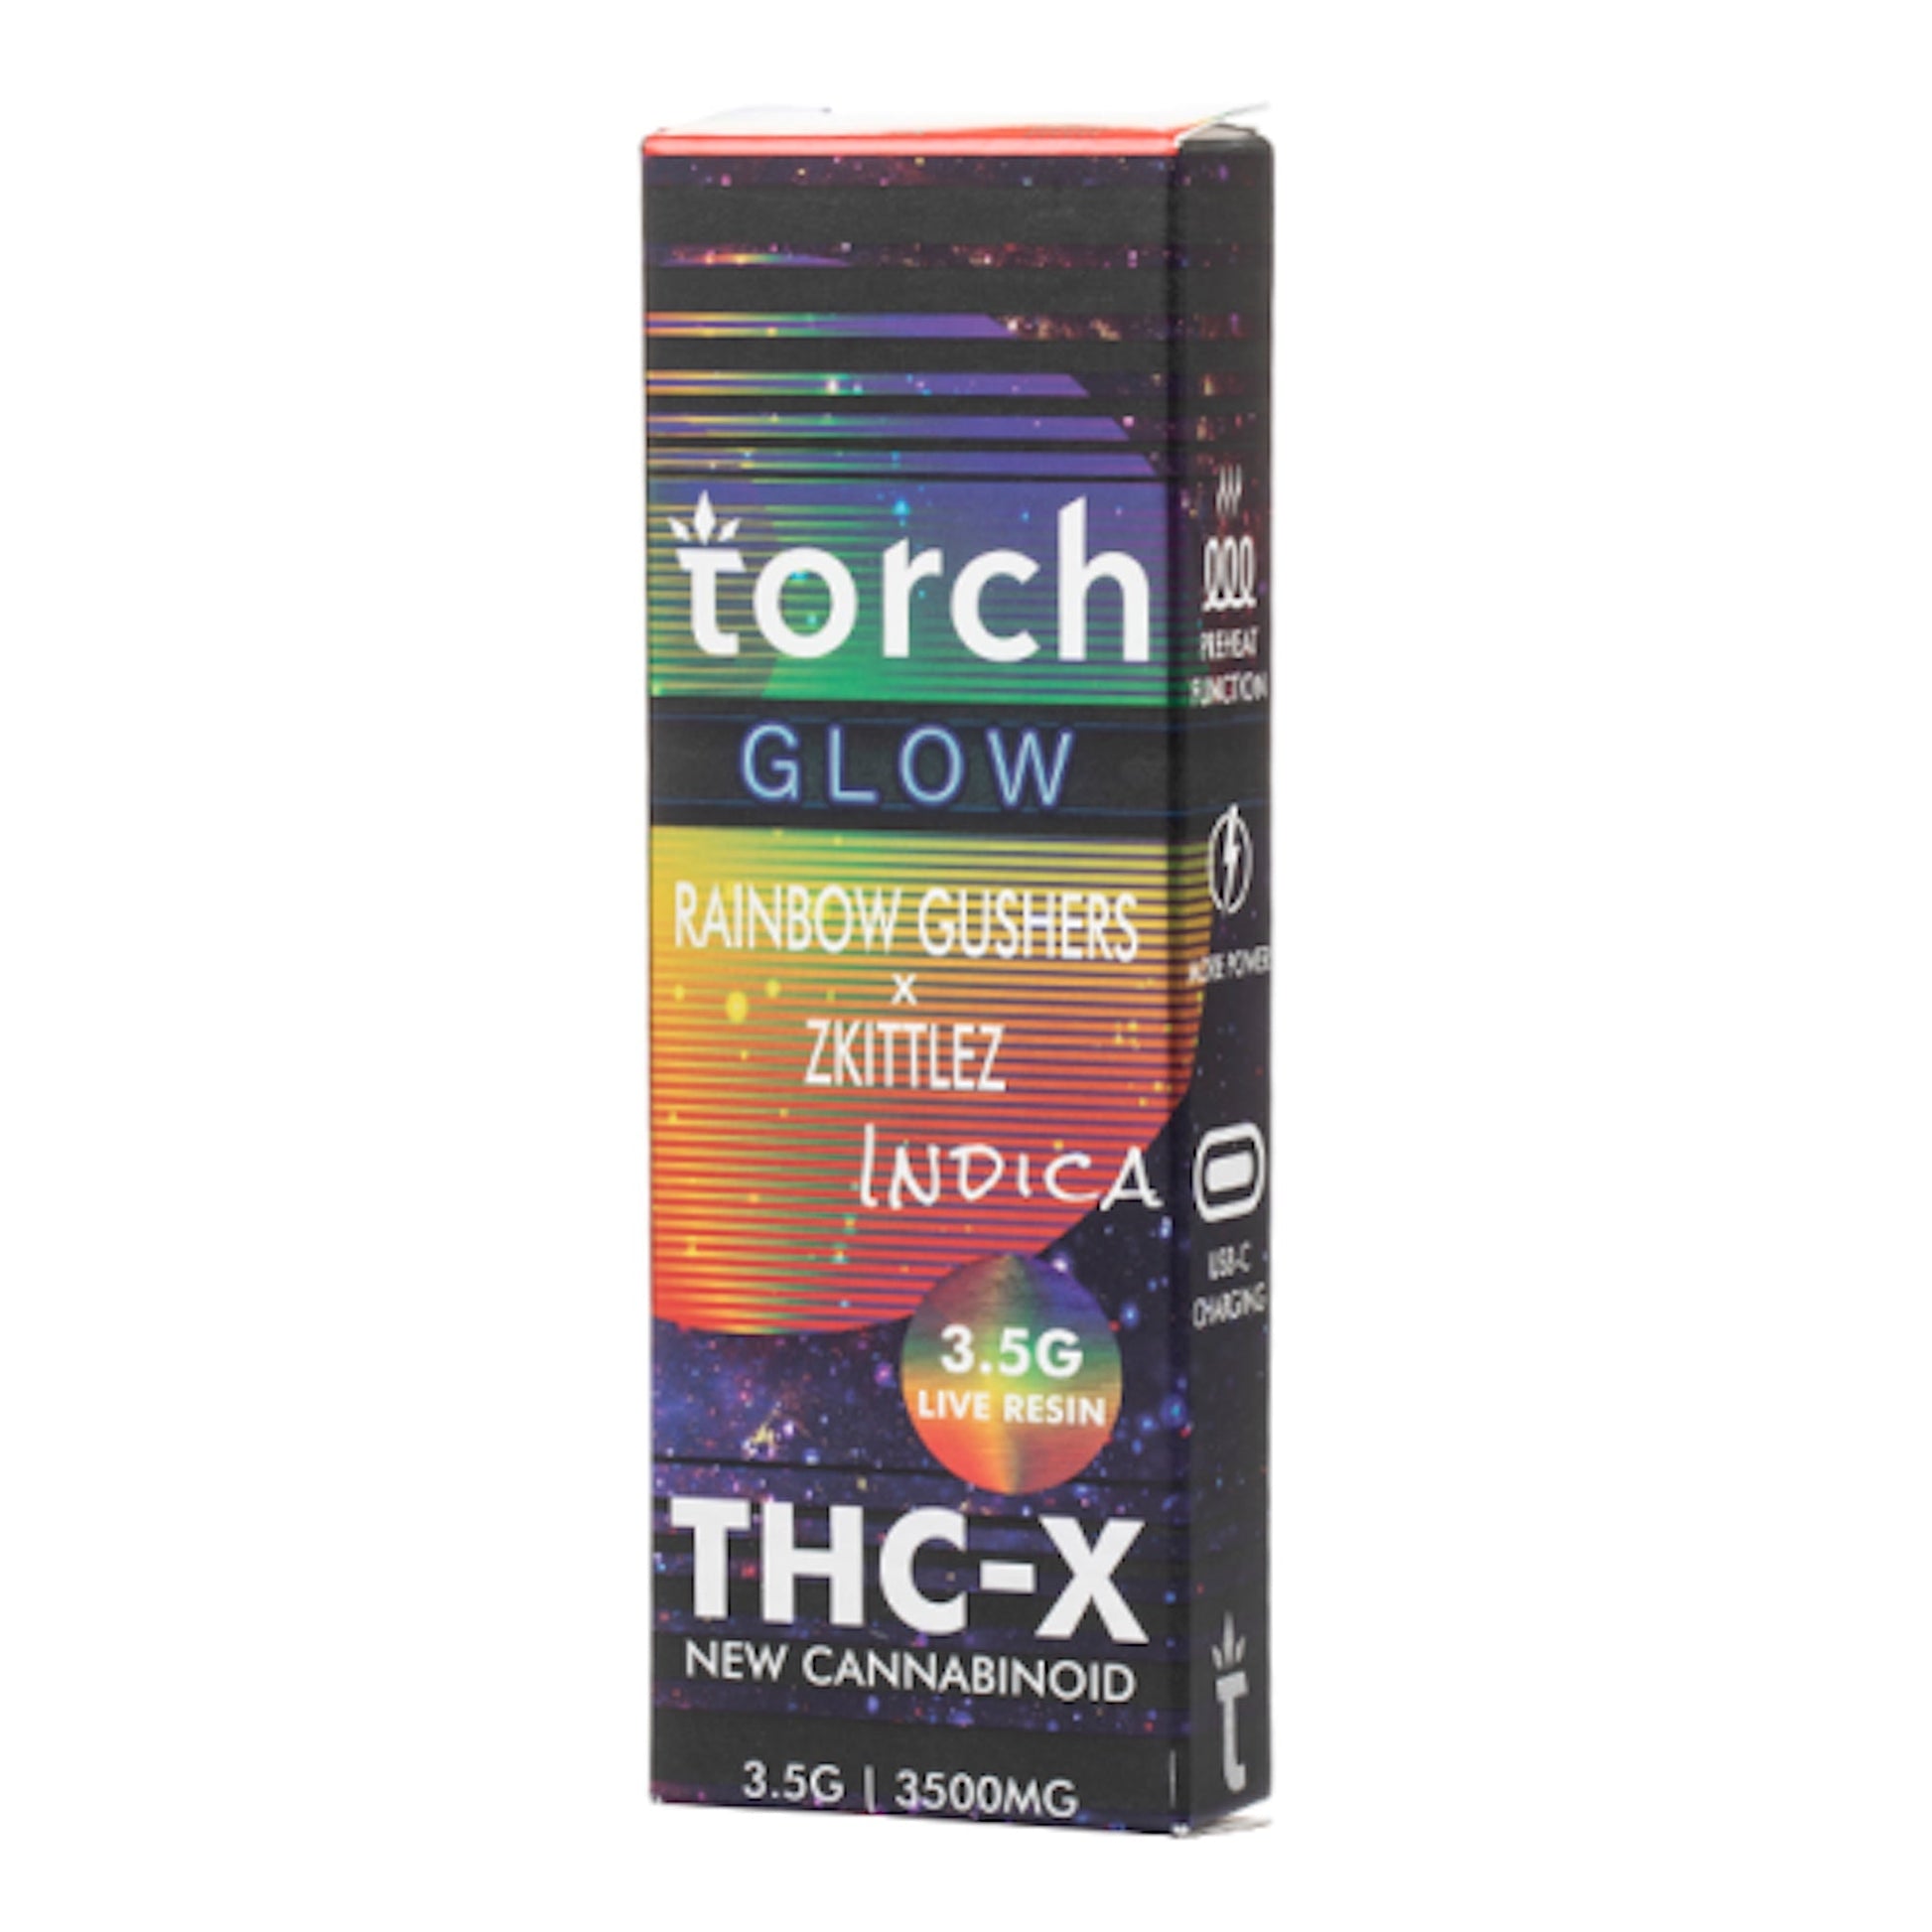 Torch Glow THC-X Vaporizer - 3500mg Rainbow Gushers x Zkittlez